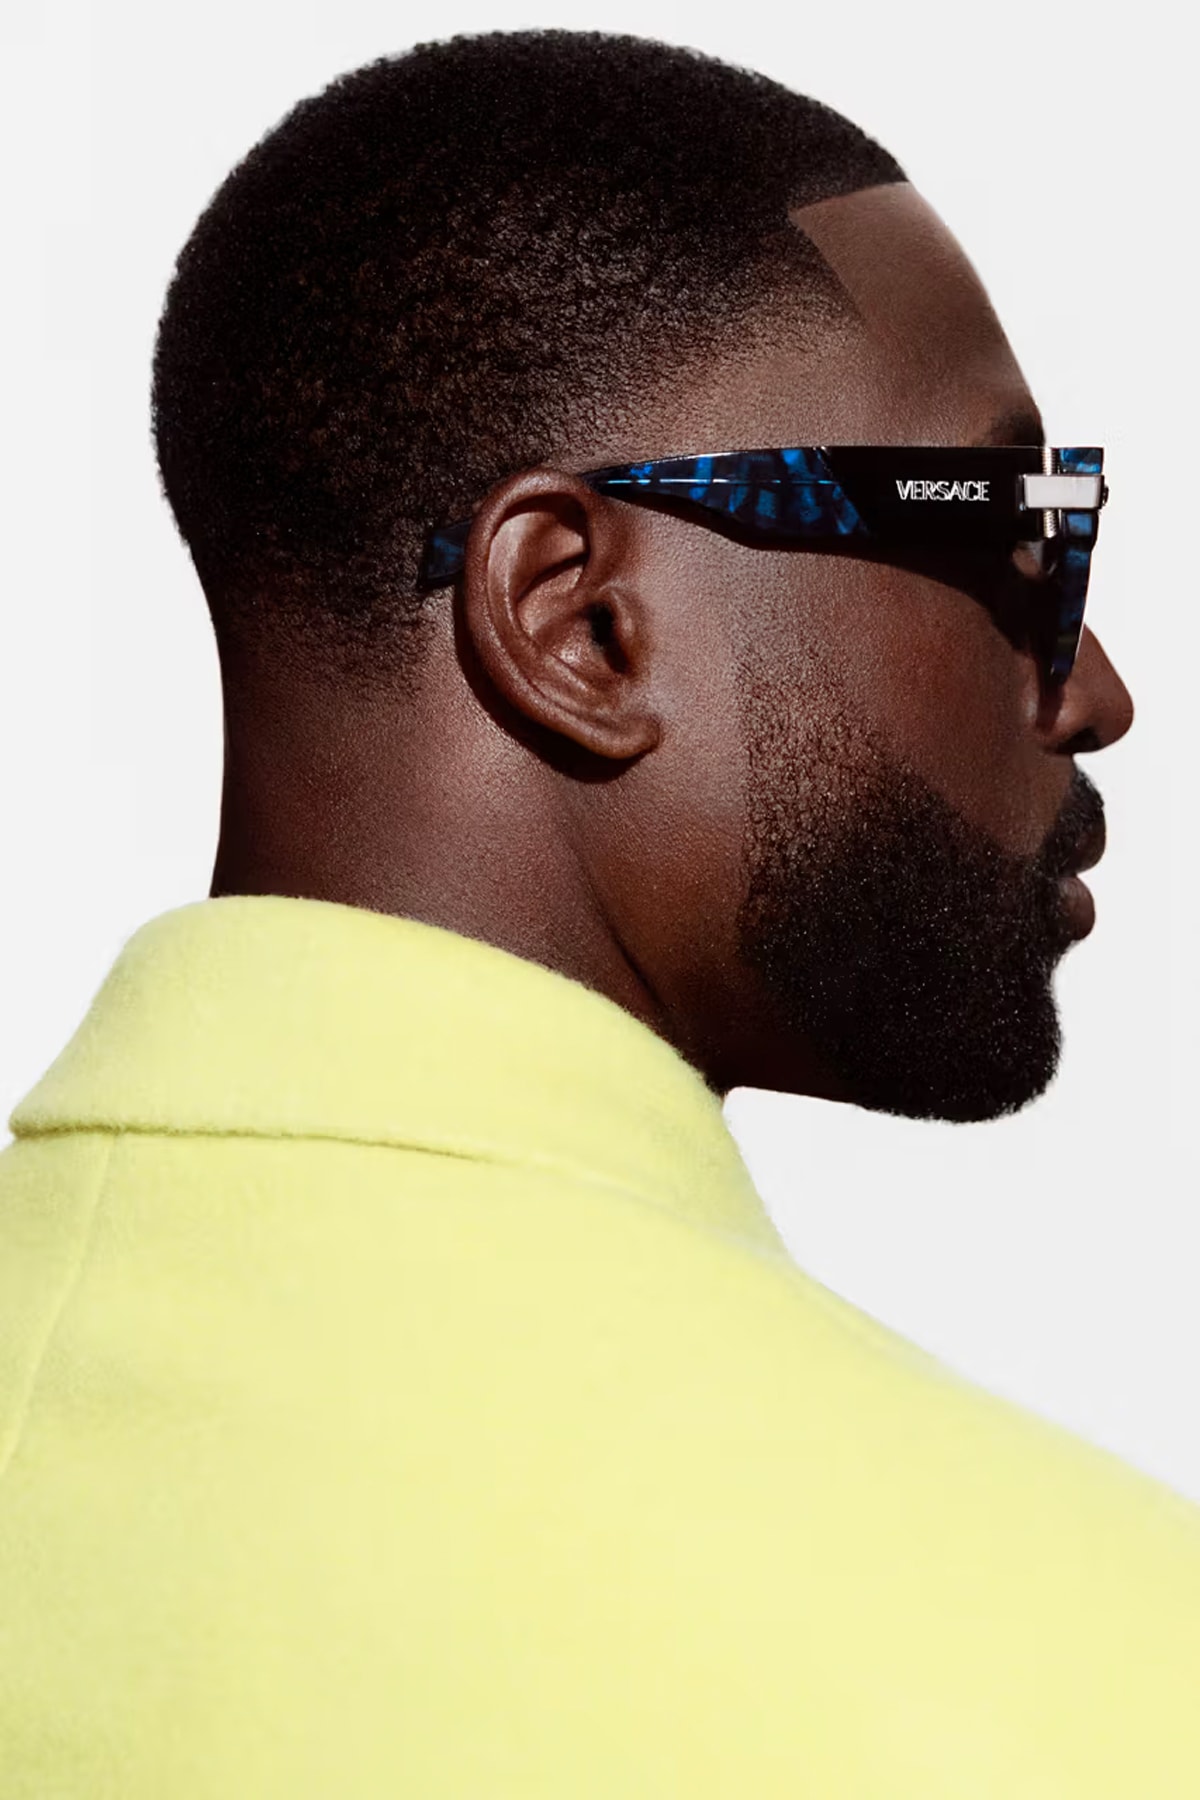 Dwyane Wade 再度演繹 Versace 最新眼鏡系列形象廣告